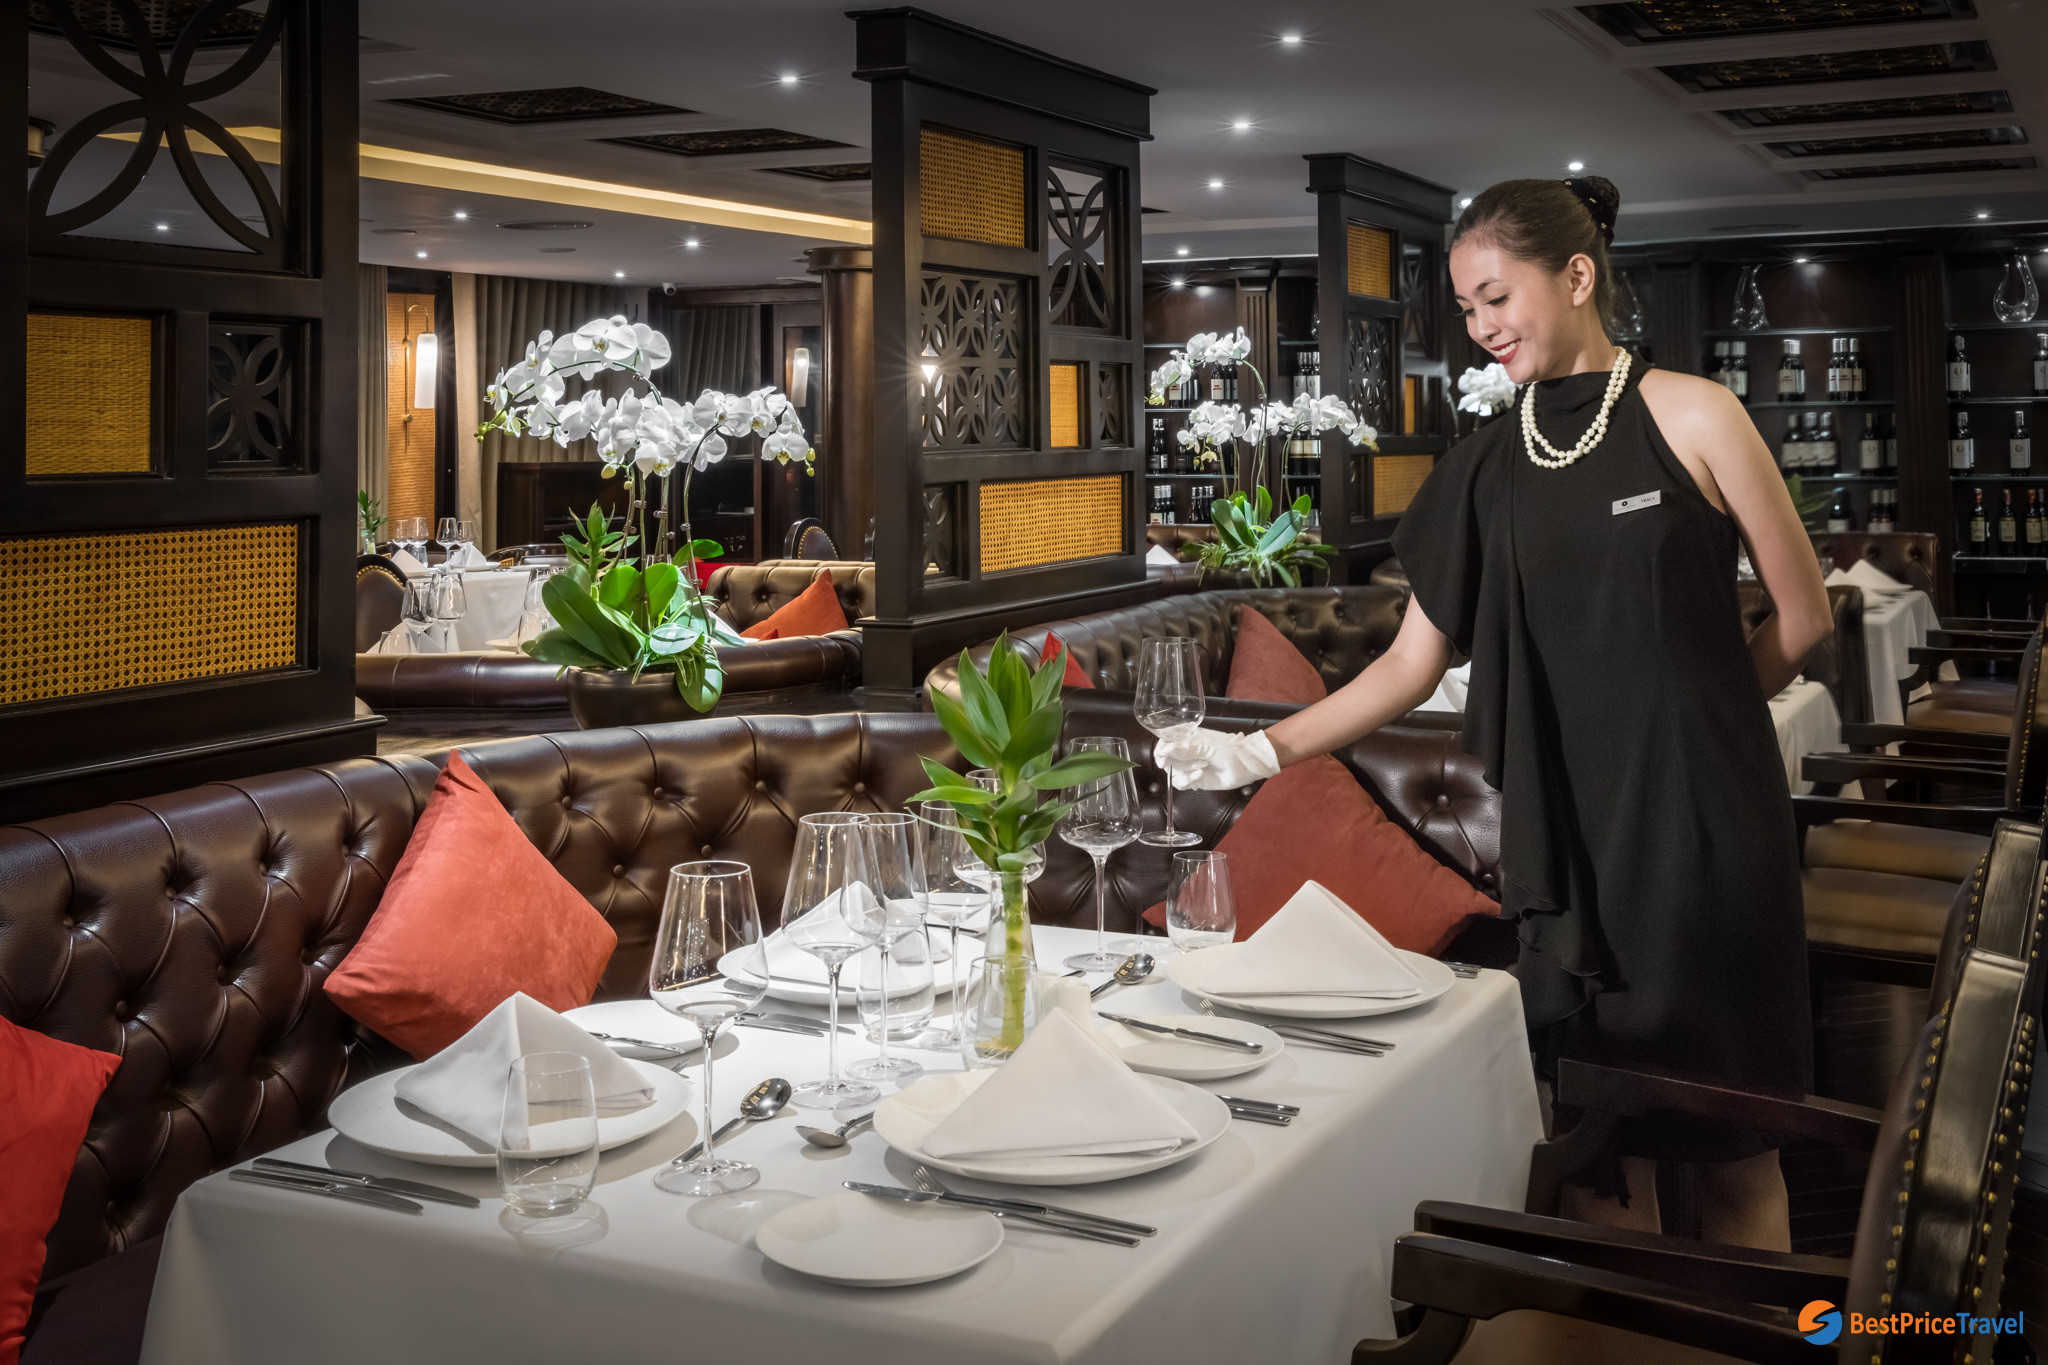 Ambassador Cruises Restaurant Waitress